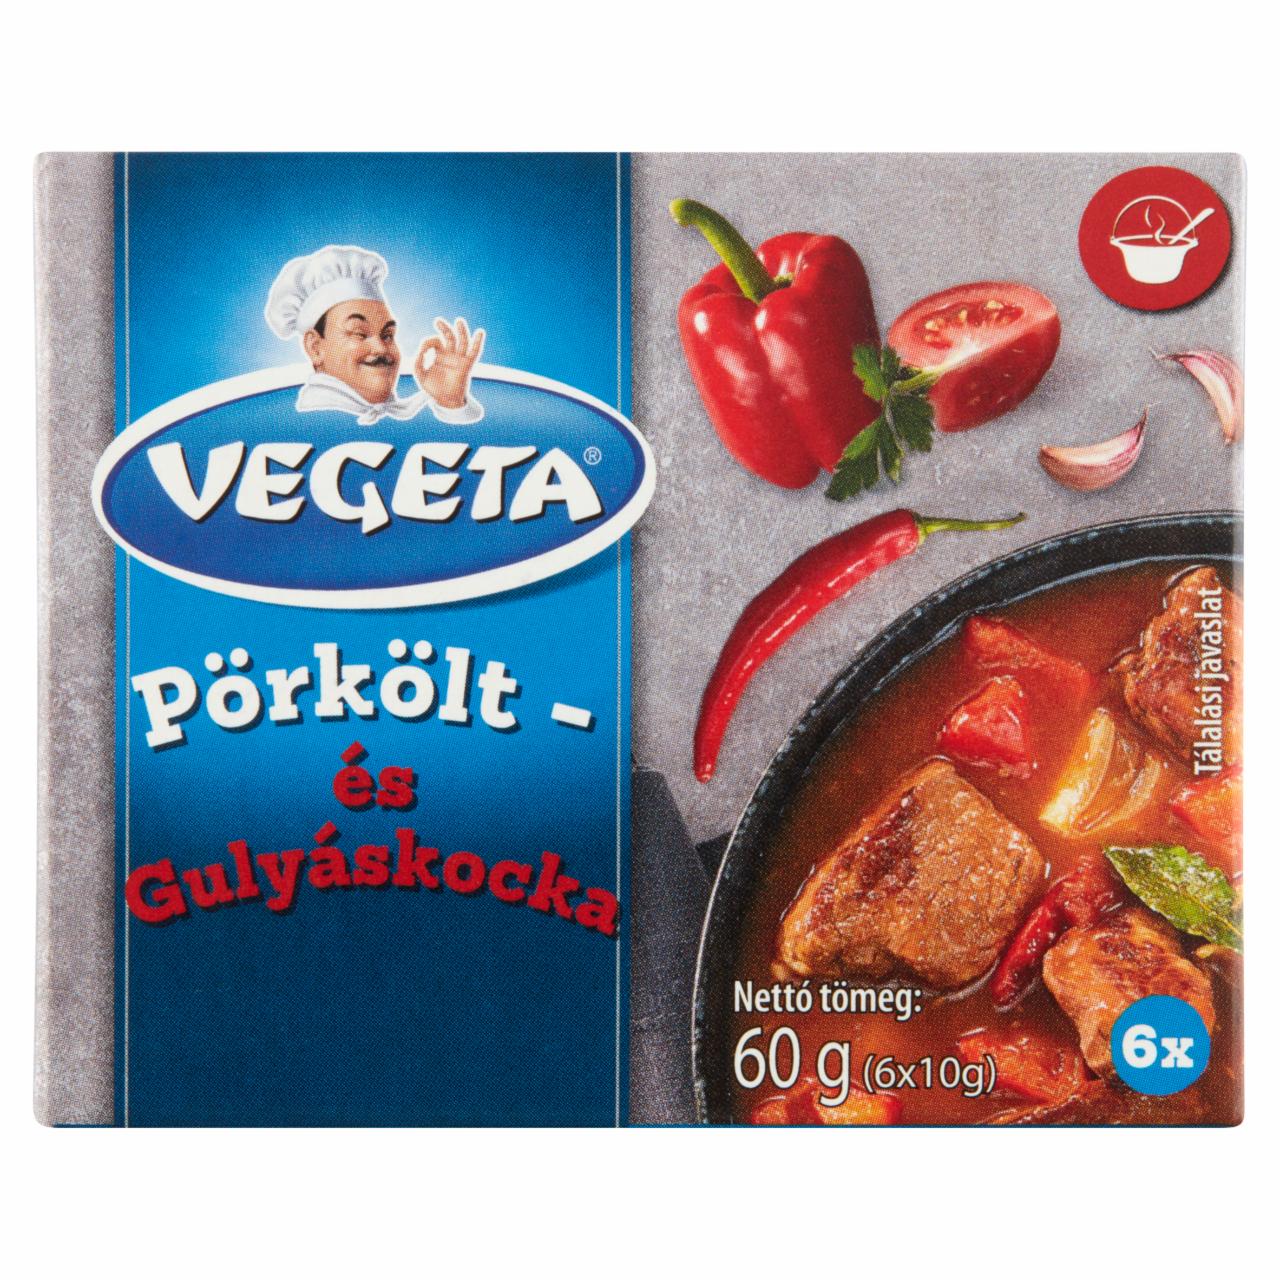 Képek - Vegeta pörkölt- és gulyáskocka 6 x 10 g (60 g)